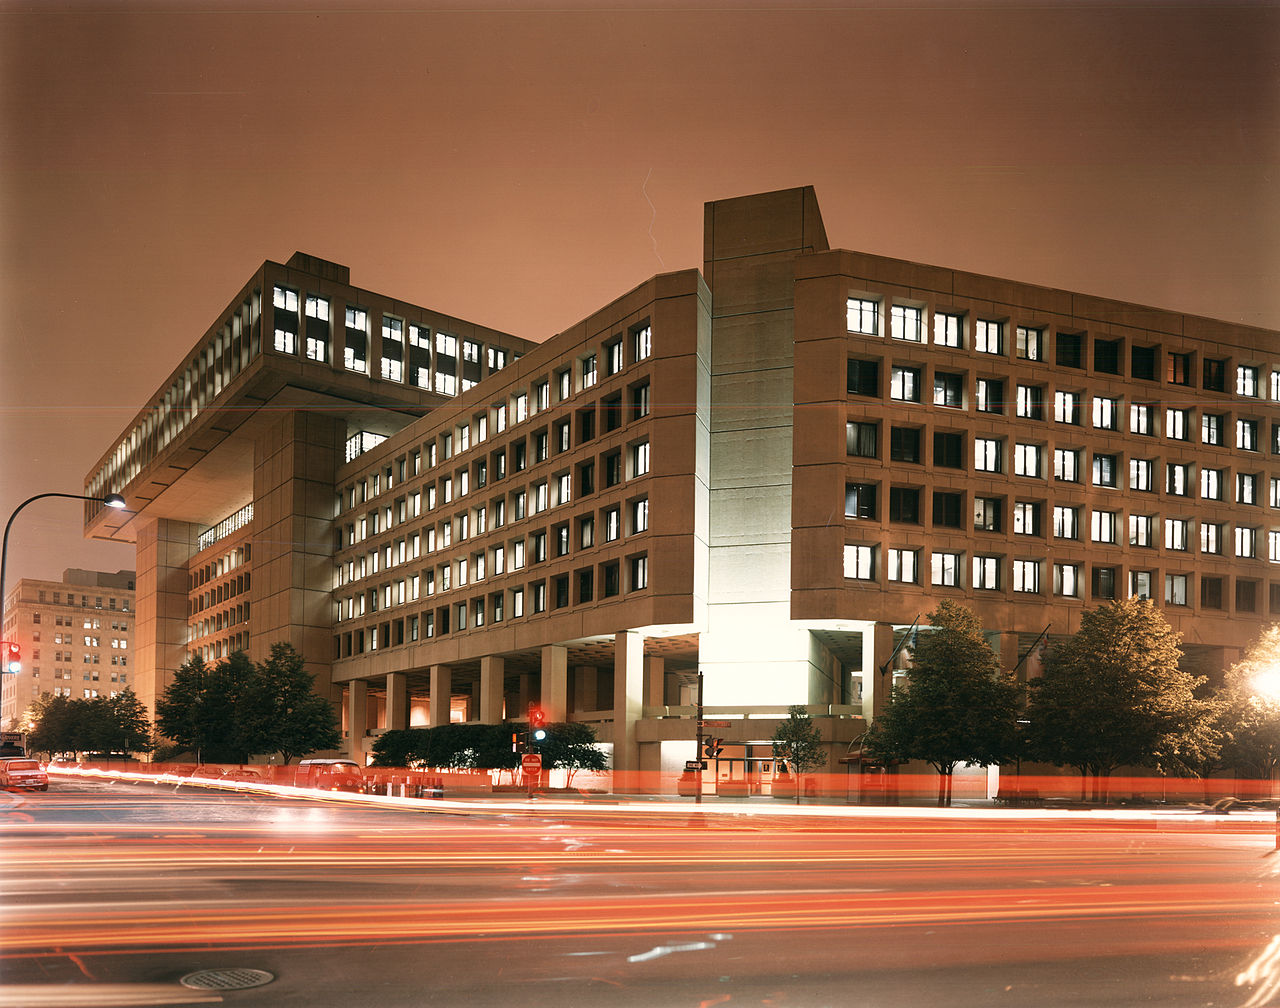 FBI Headquarters At Night.